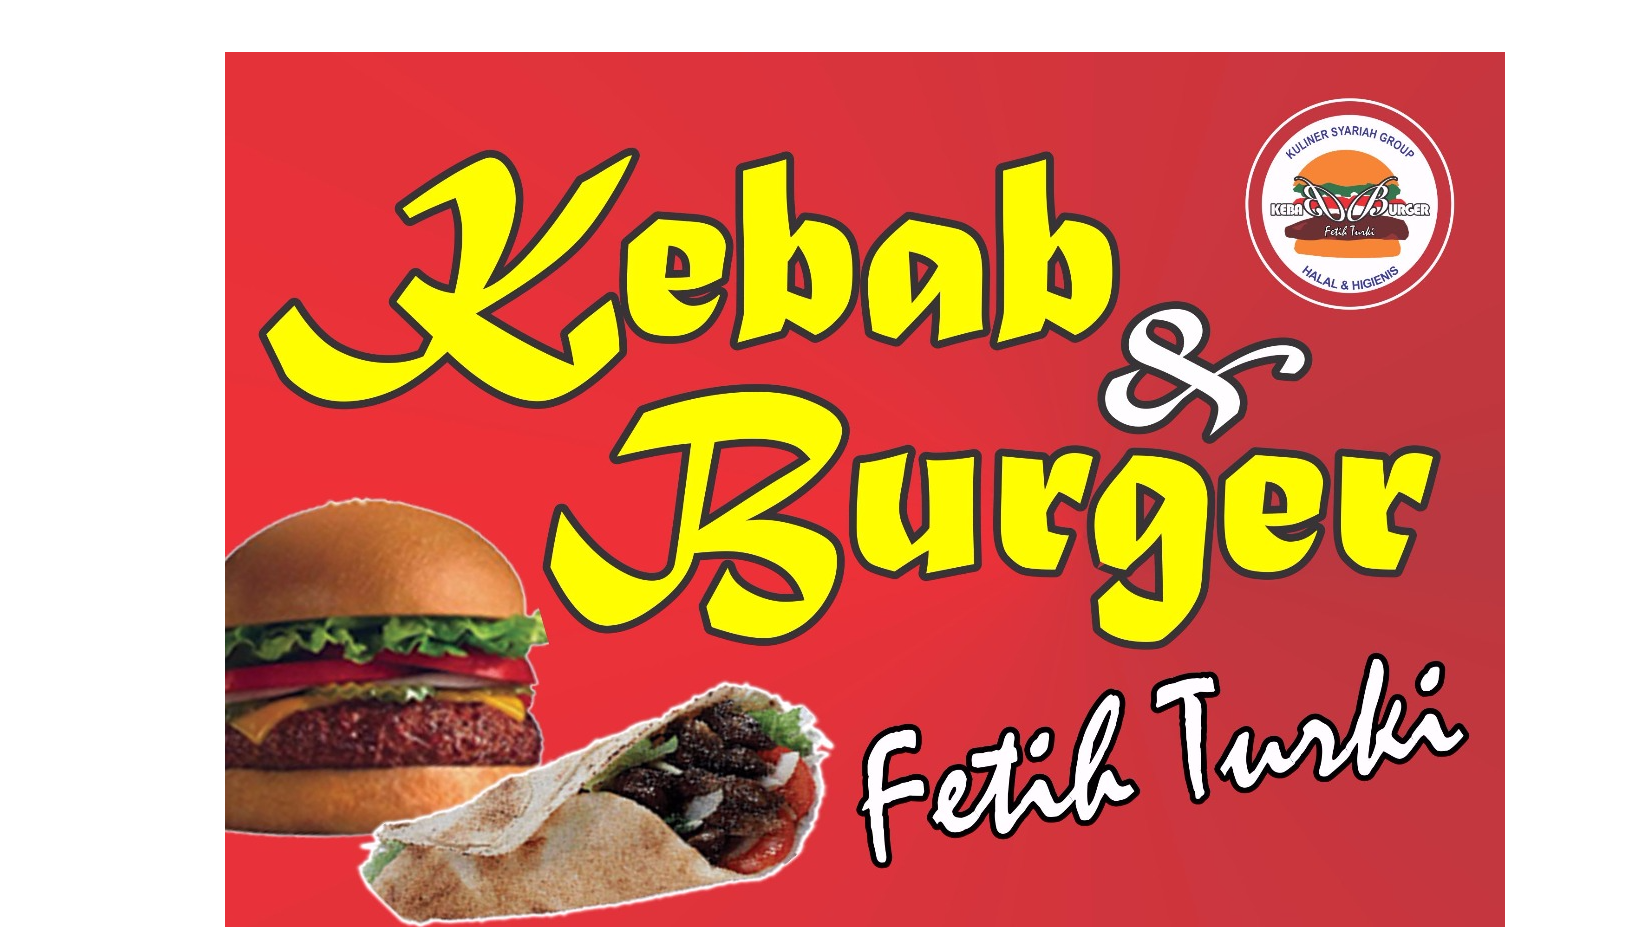 Kebab Burger Fetih Turki, Buluran